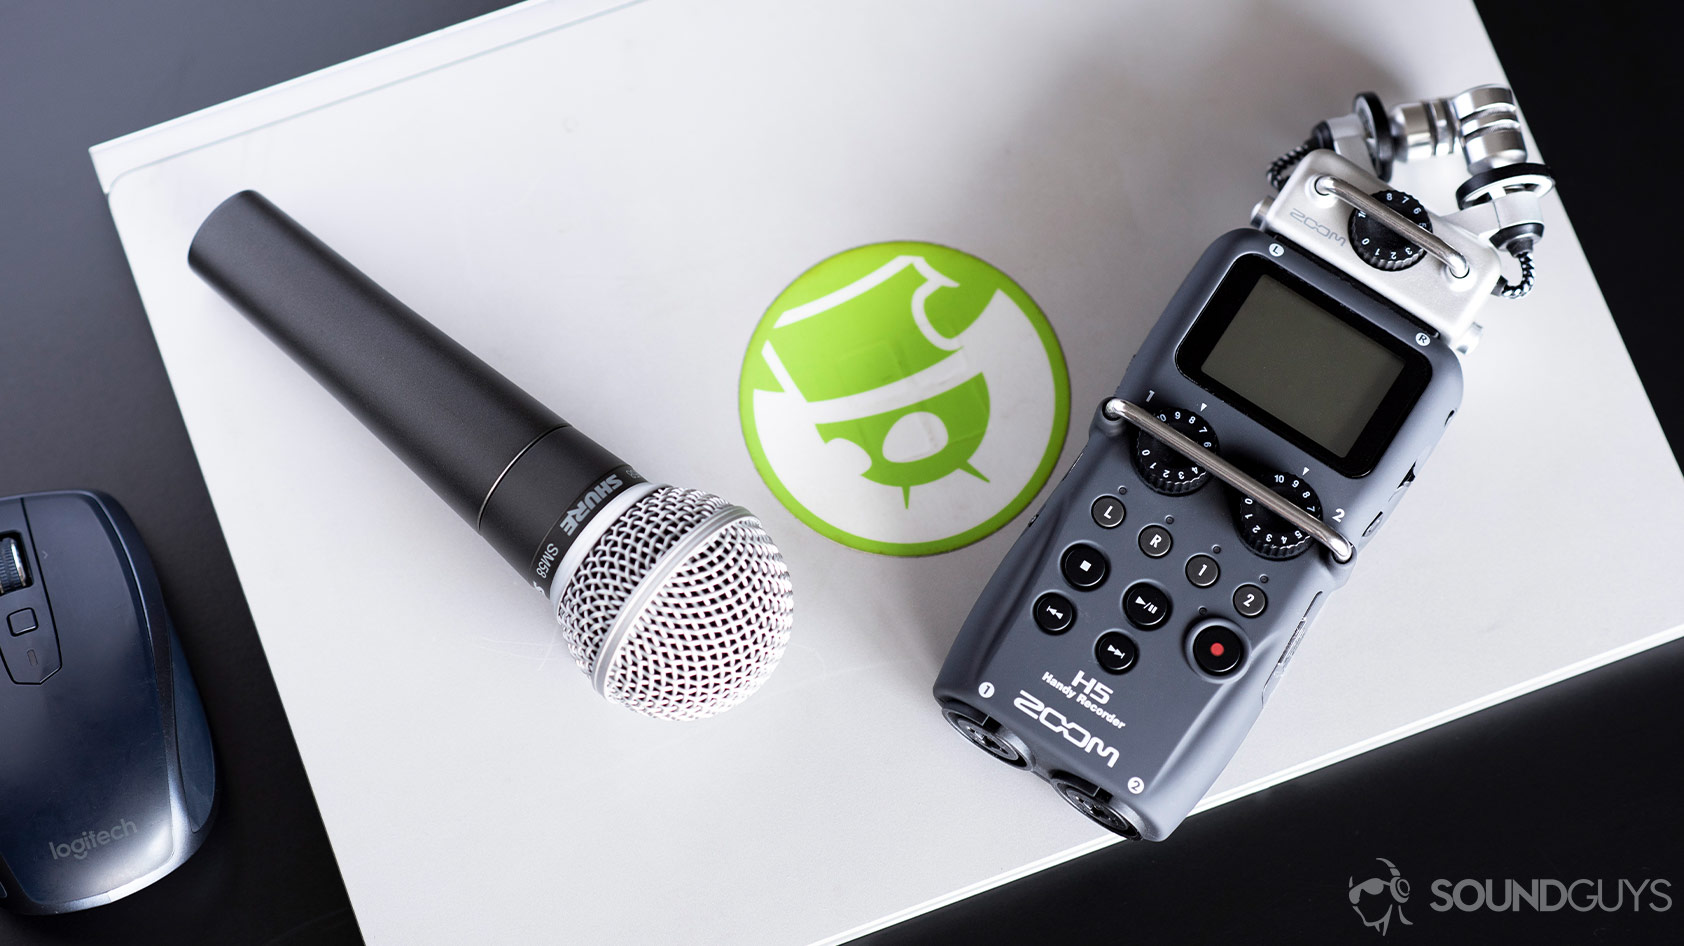 overzien Reserveren Aanvrager Best voice recorders: For podcasts, field work, and more - SoundGuys